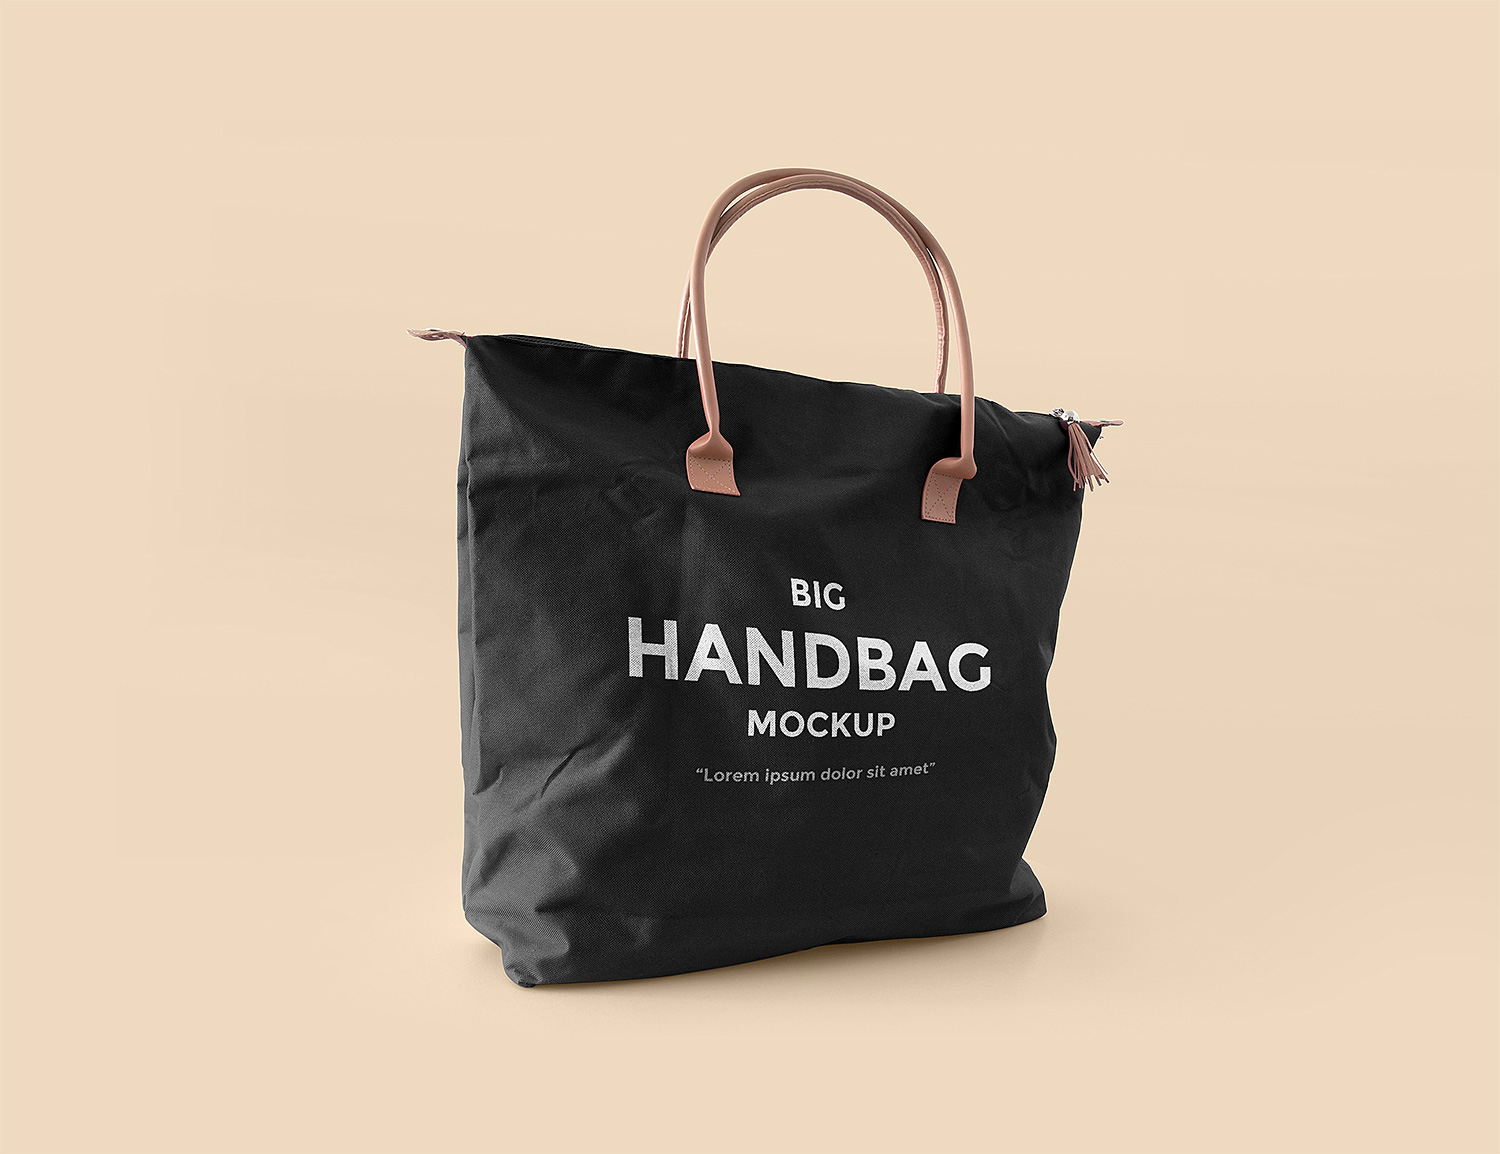 Download Big Handbag Mockup Free | Free Mockup